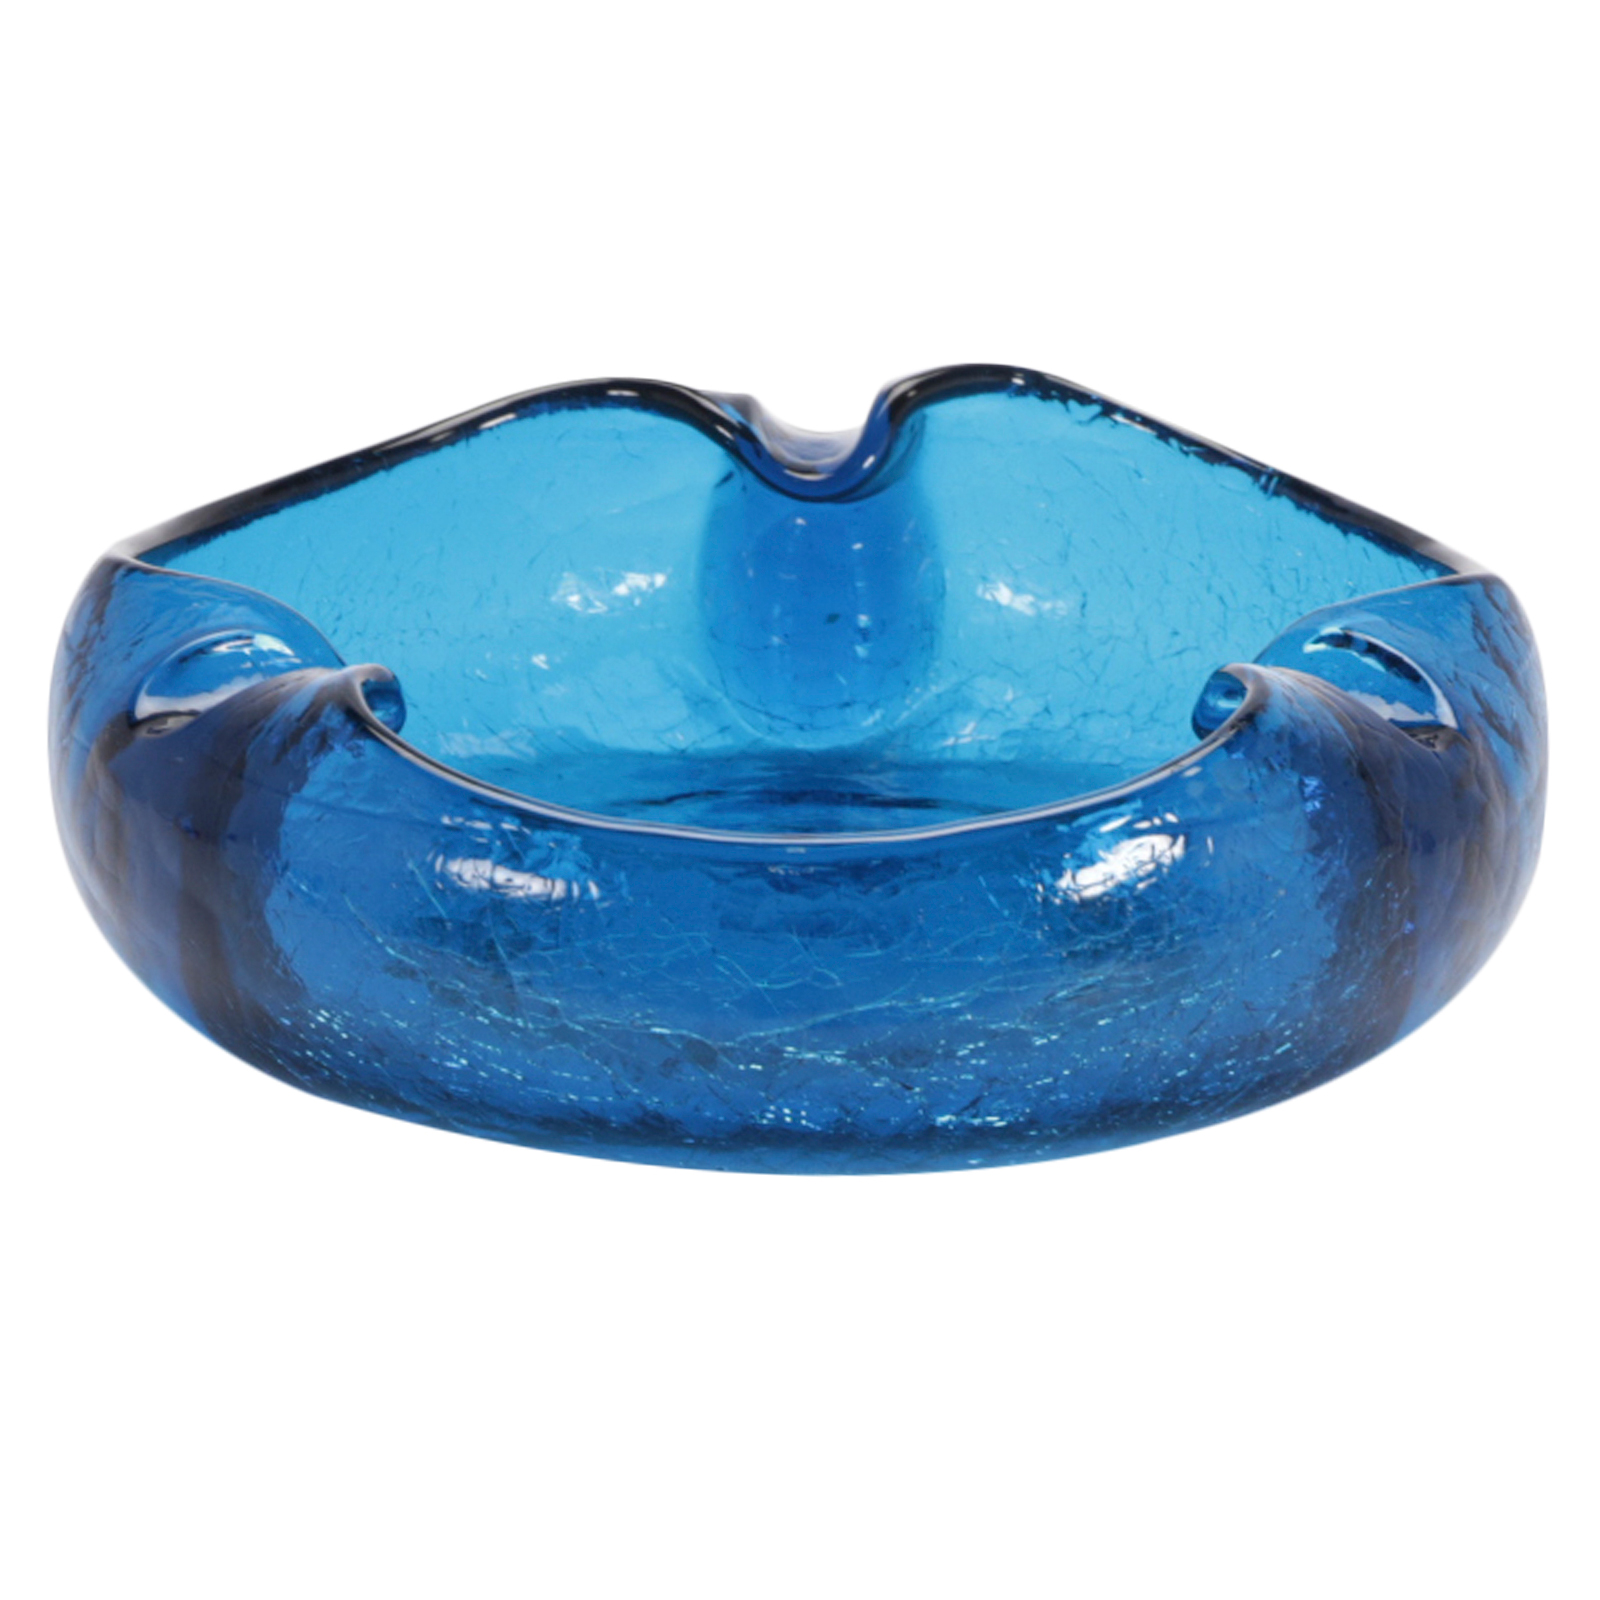 Vintage round clear blue glass ashtray, KIG ashtray, Small vintage  ashtray